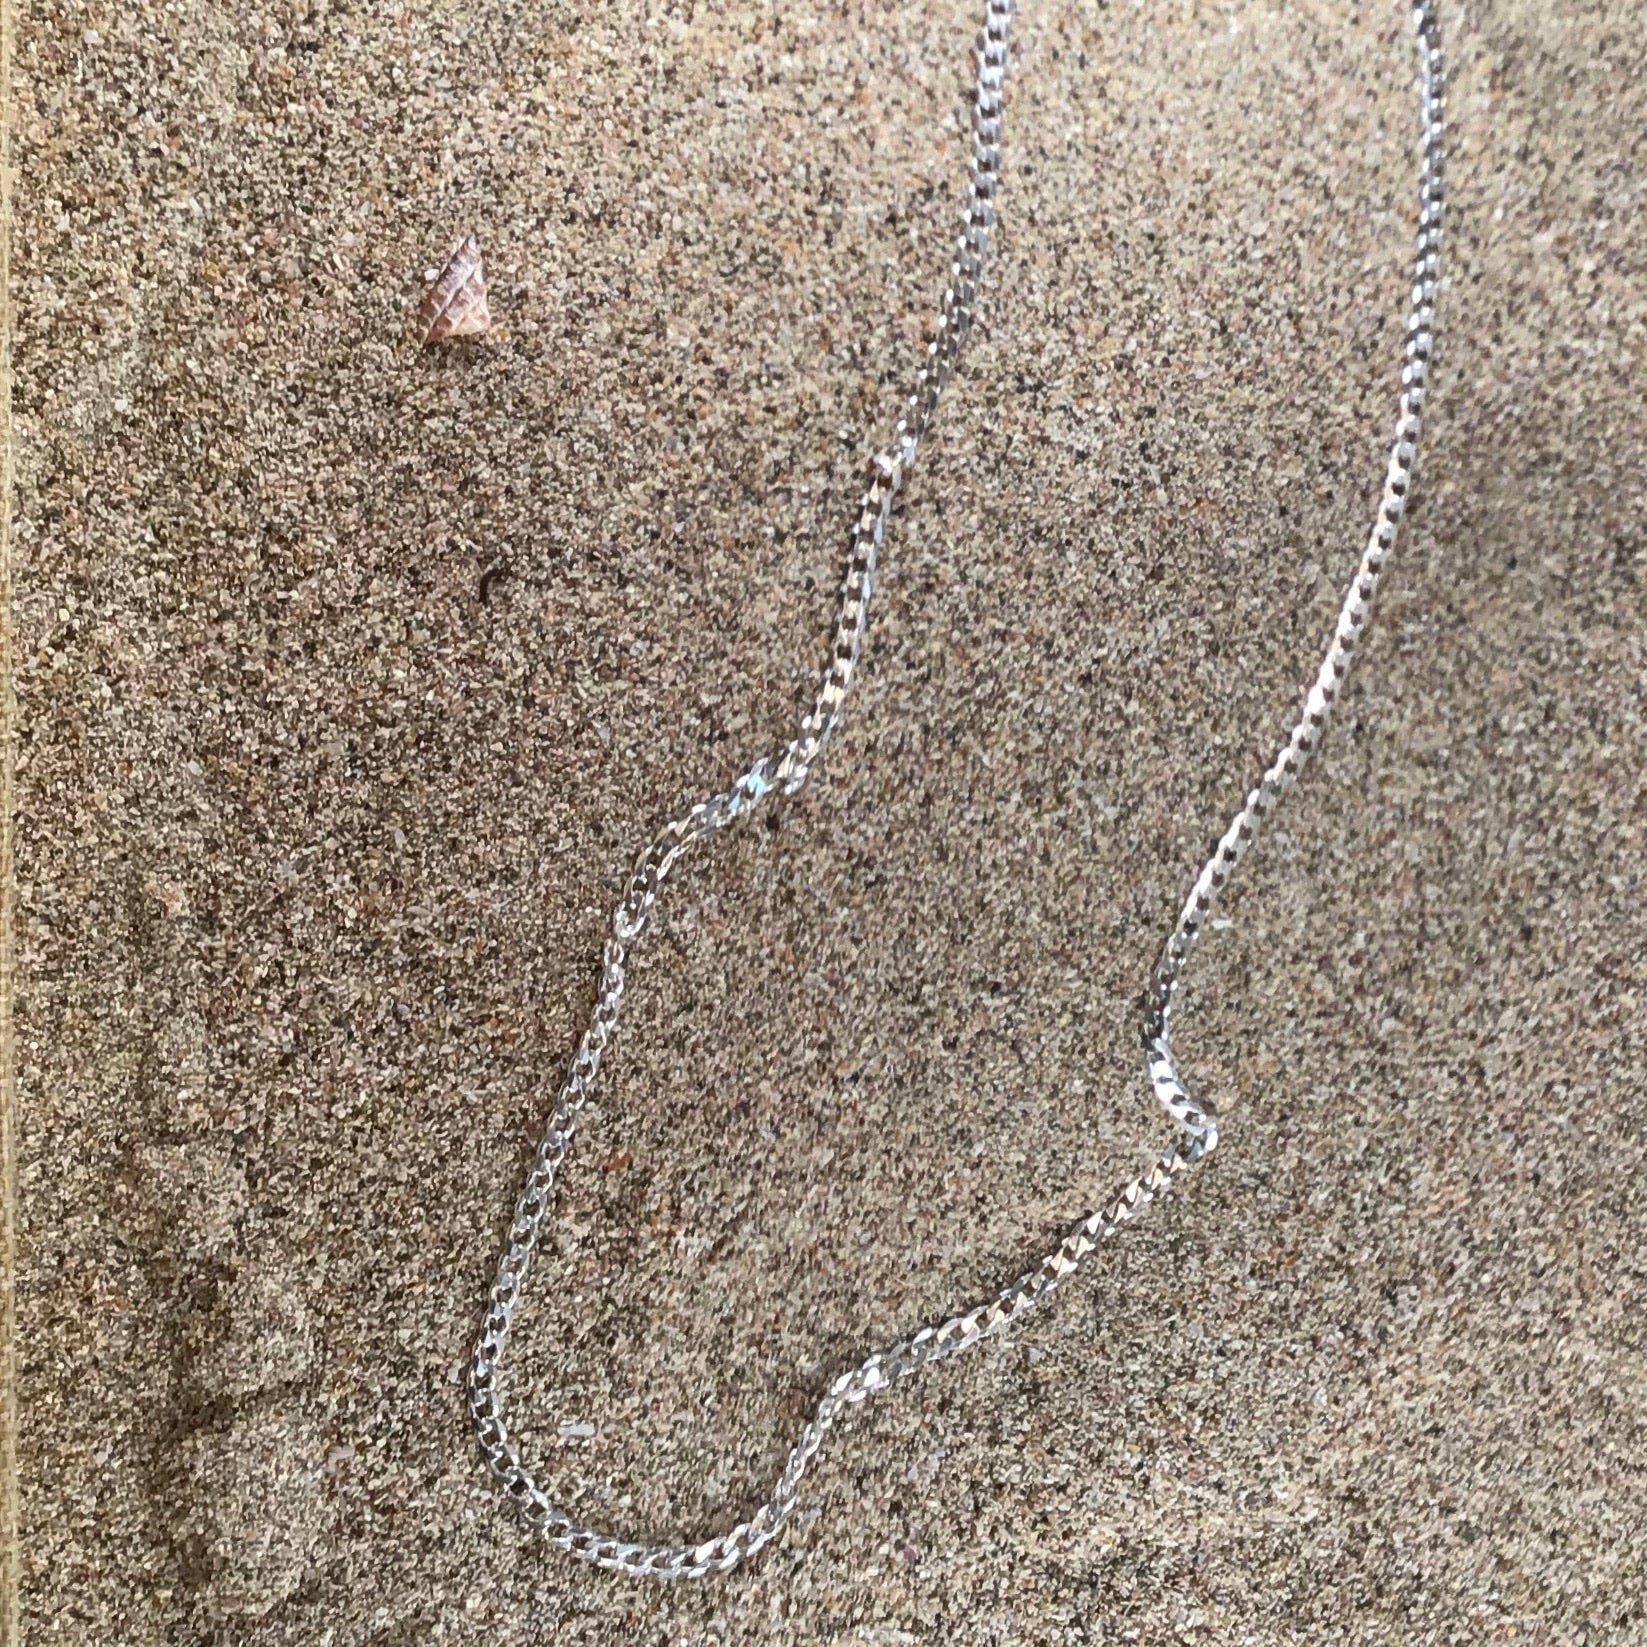 Cubana Link Chain, 20 inch-Jenstones Jewelry